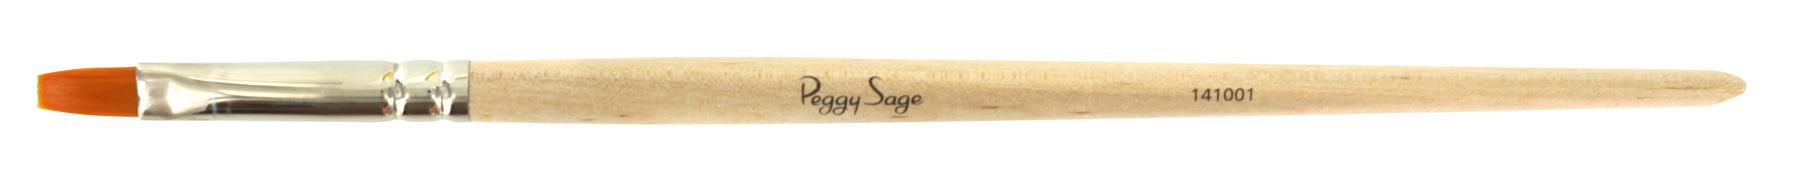 PEGGY SAGE ACC.MANI/UNGHIE 141001 PENNELLO SPECIALE